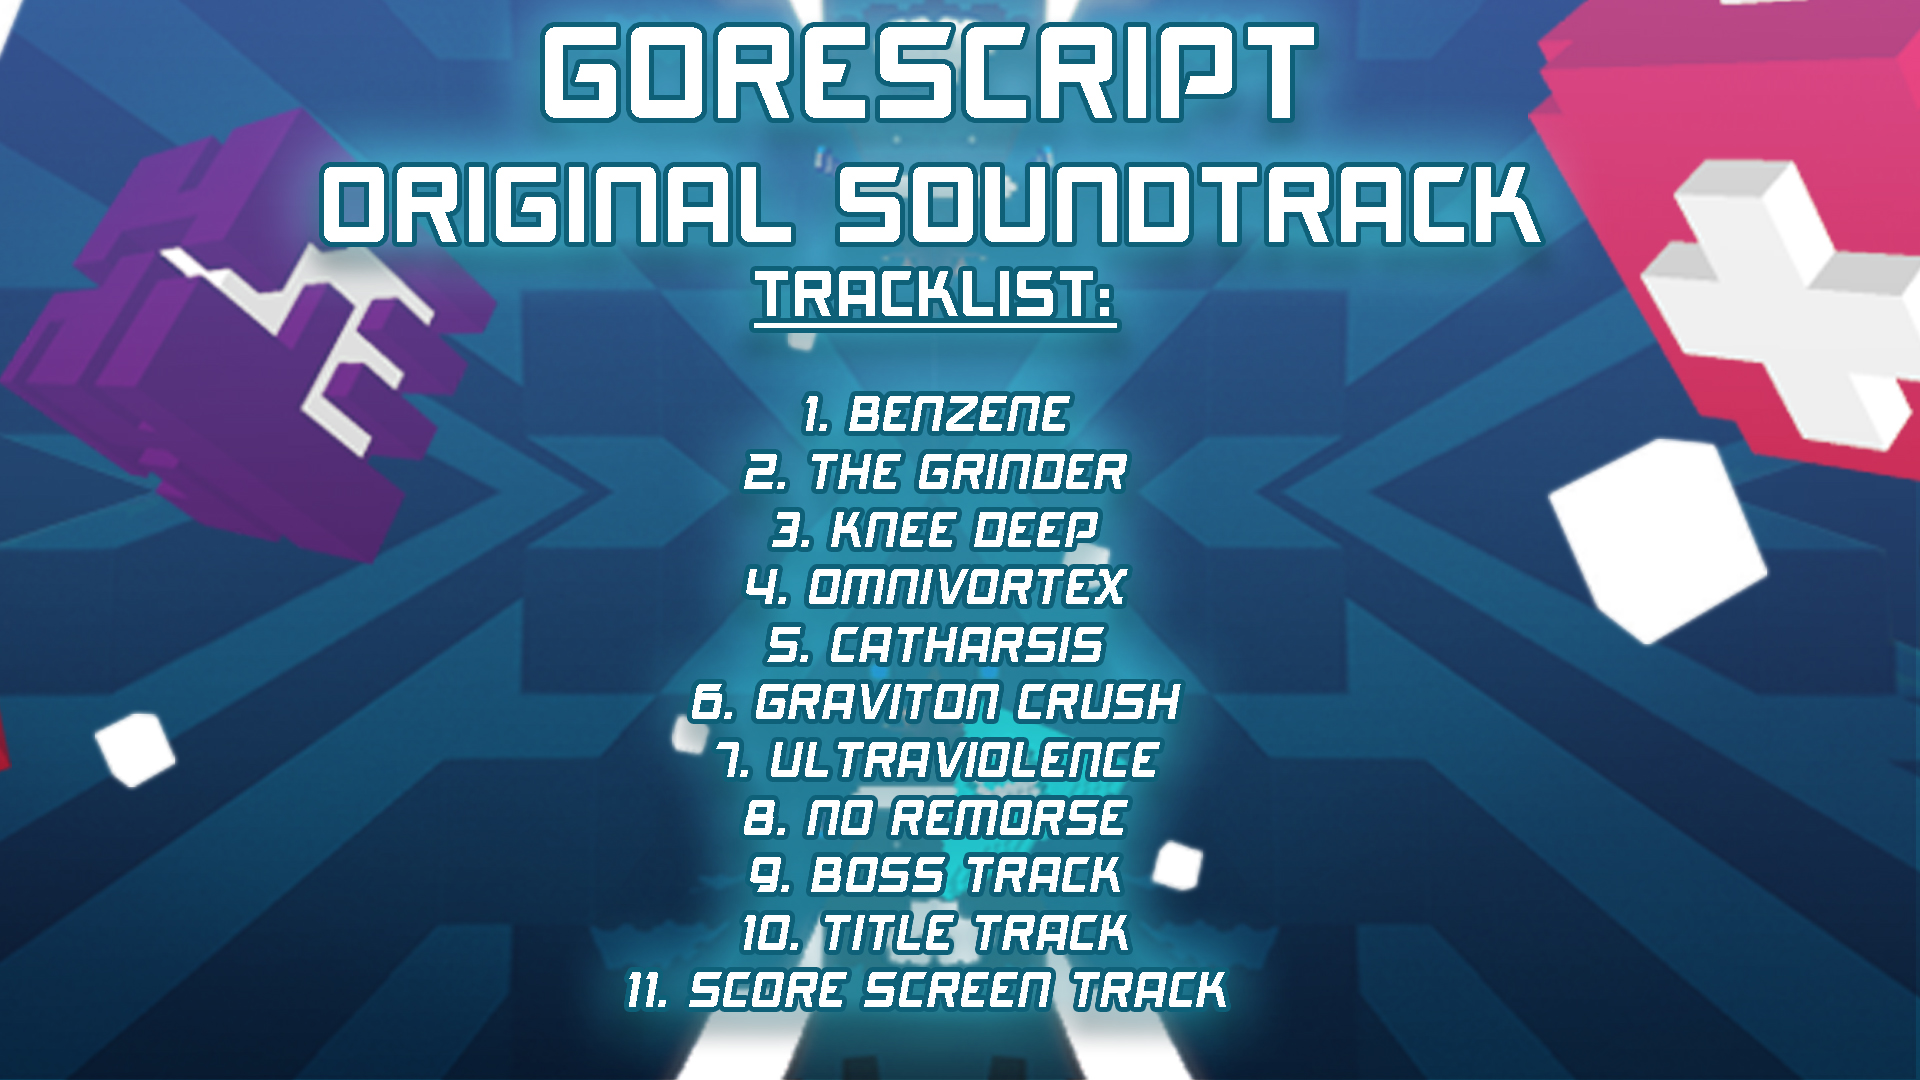 Gorescript - Original Soundtrack Featured Screenshot #1